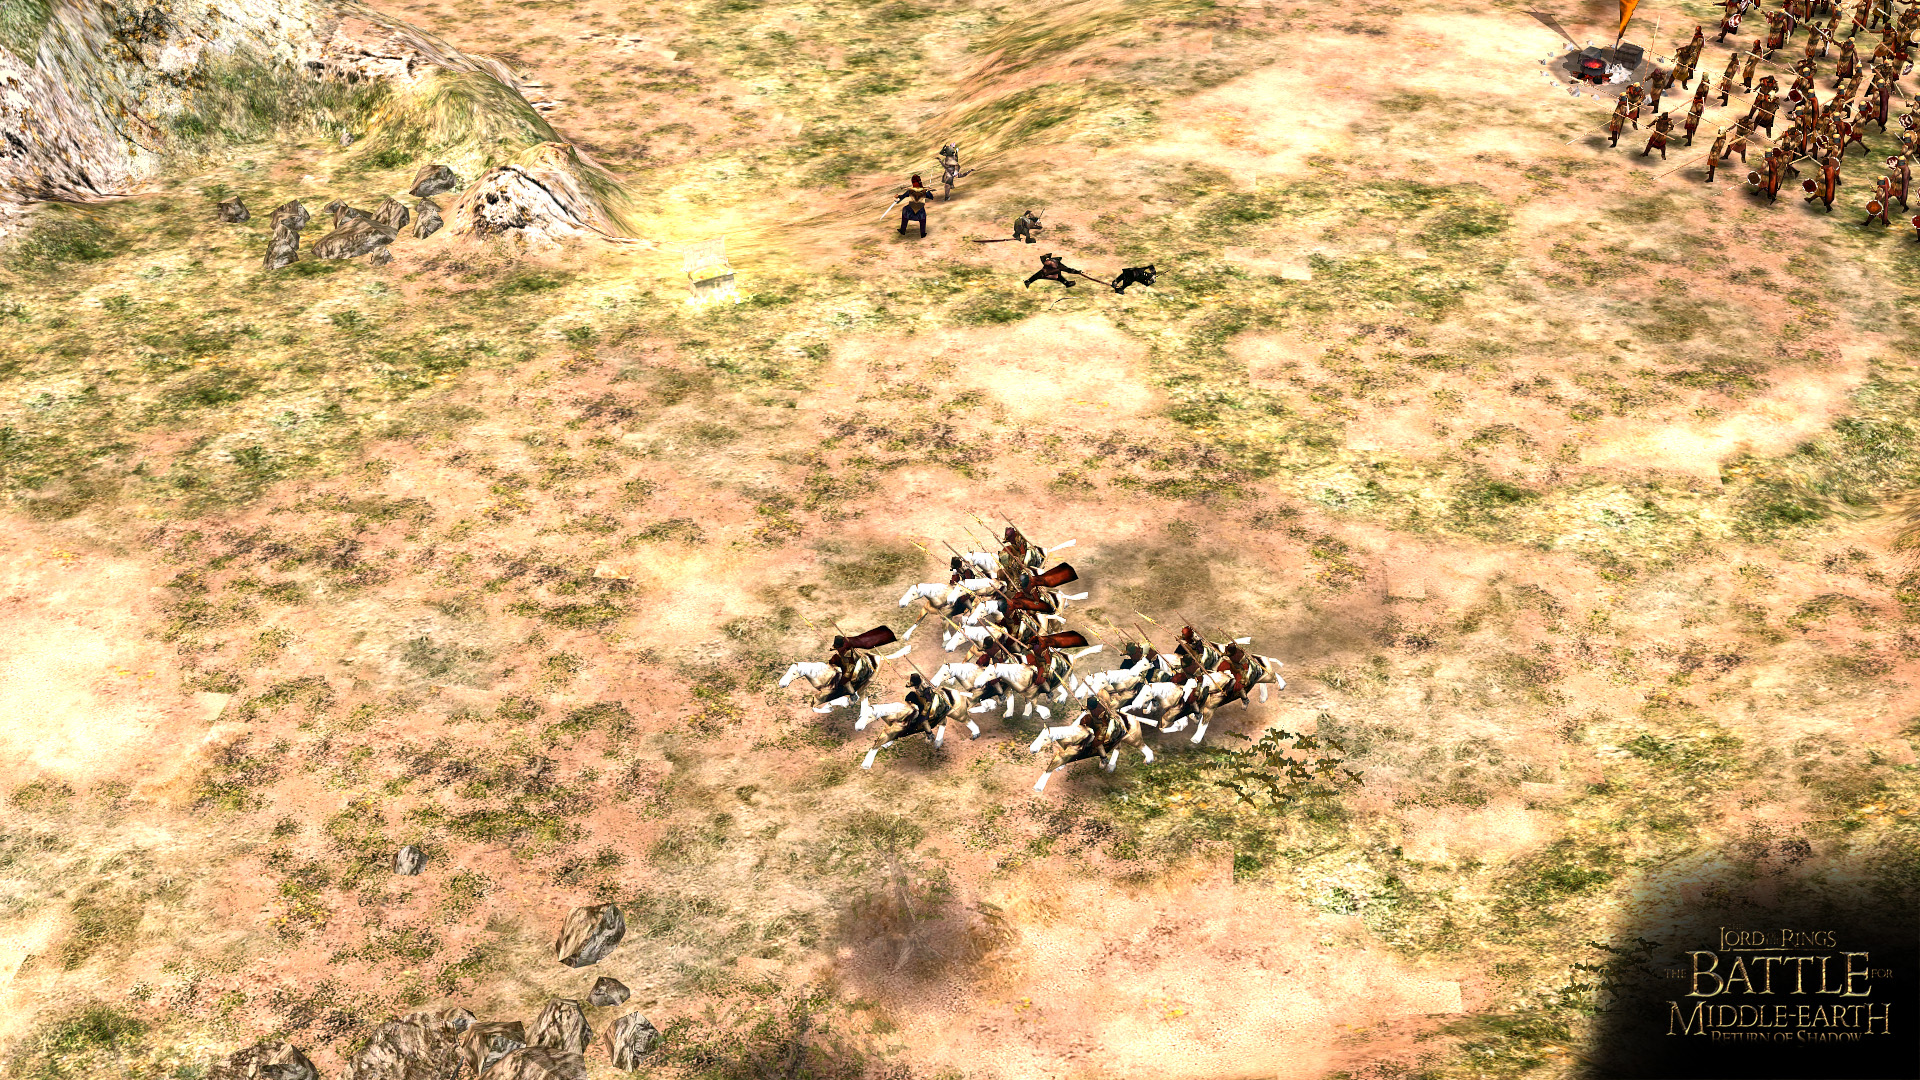 Haradrim Lancers ride out